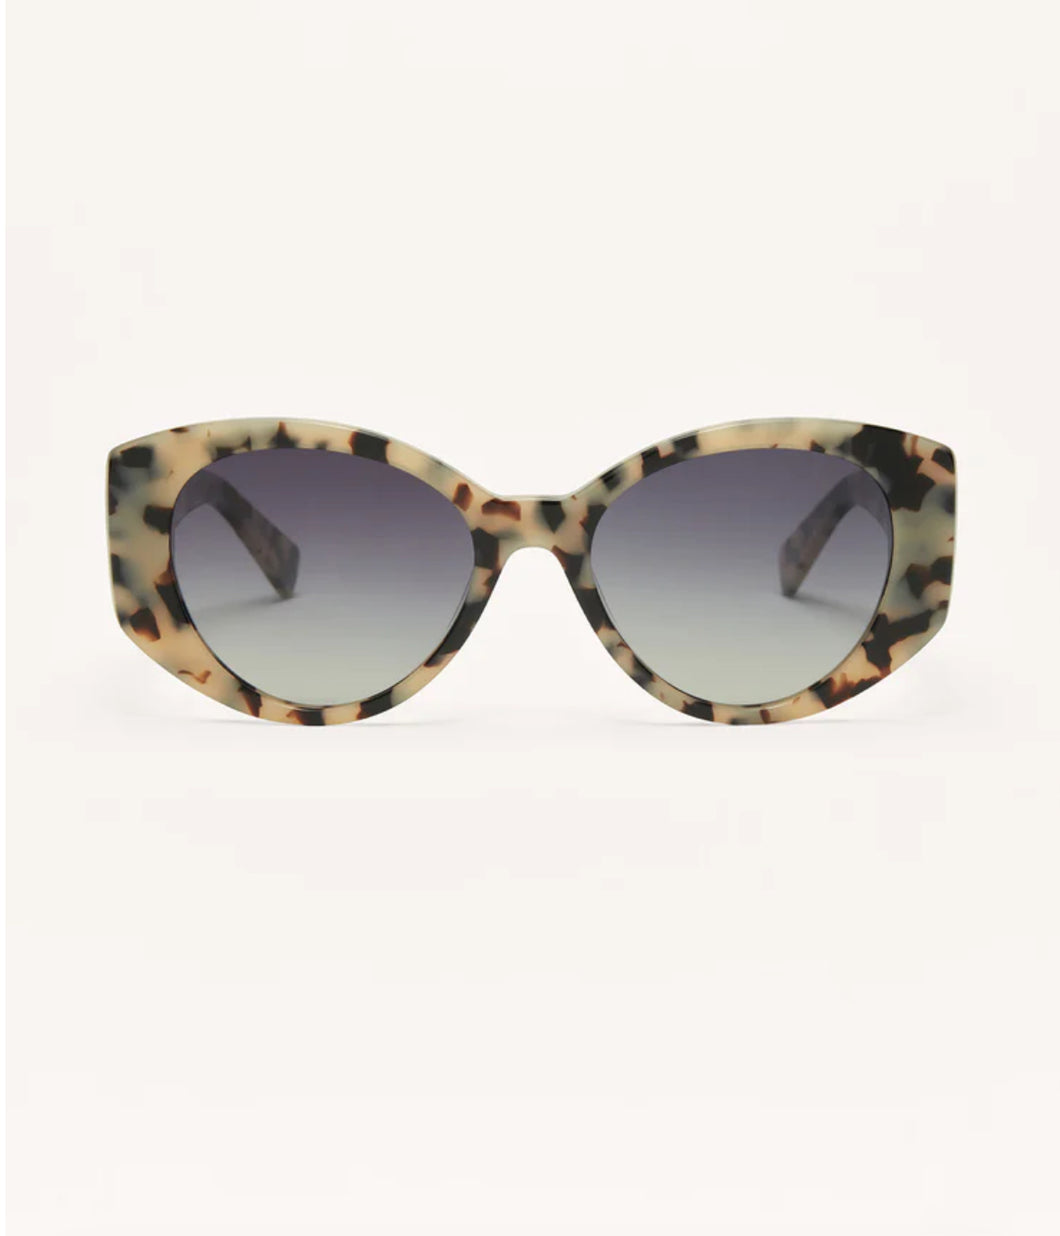 Z Supply: Daydream Polarized Sunglasses in Brown Tortoise Gradient